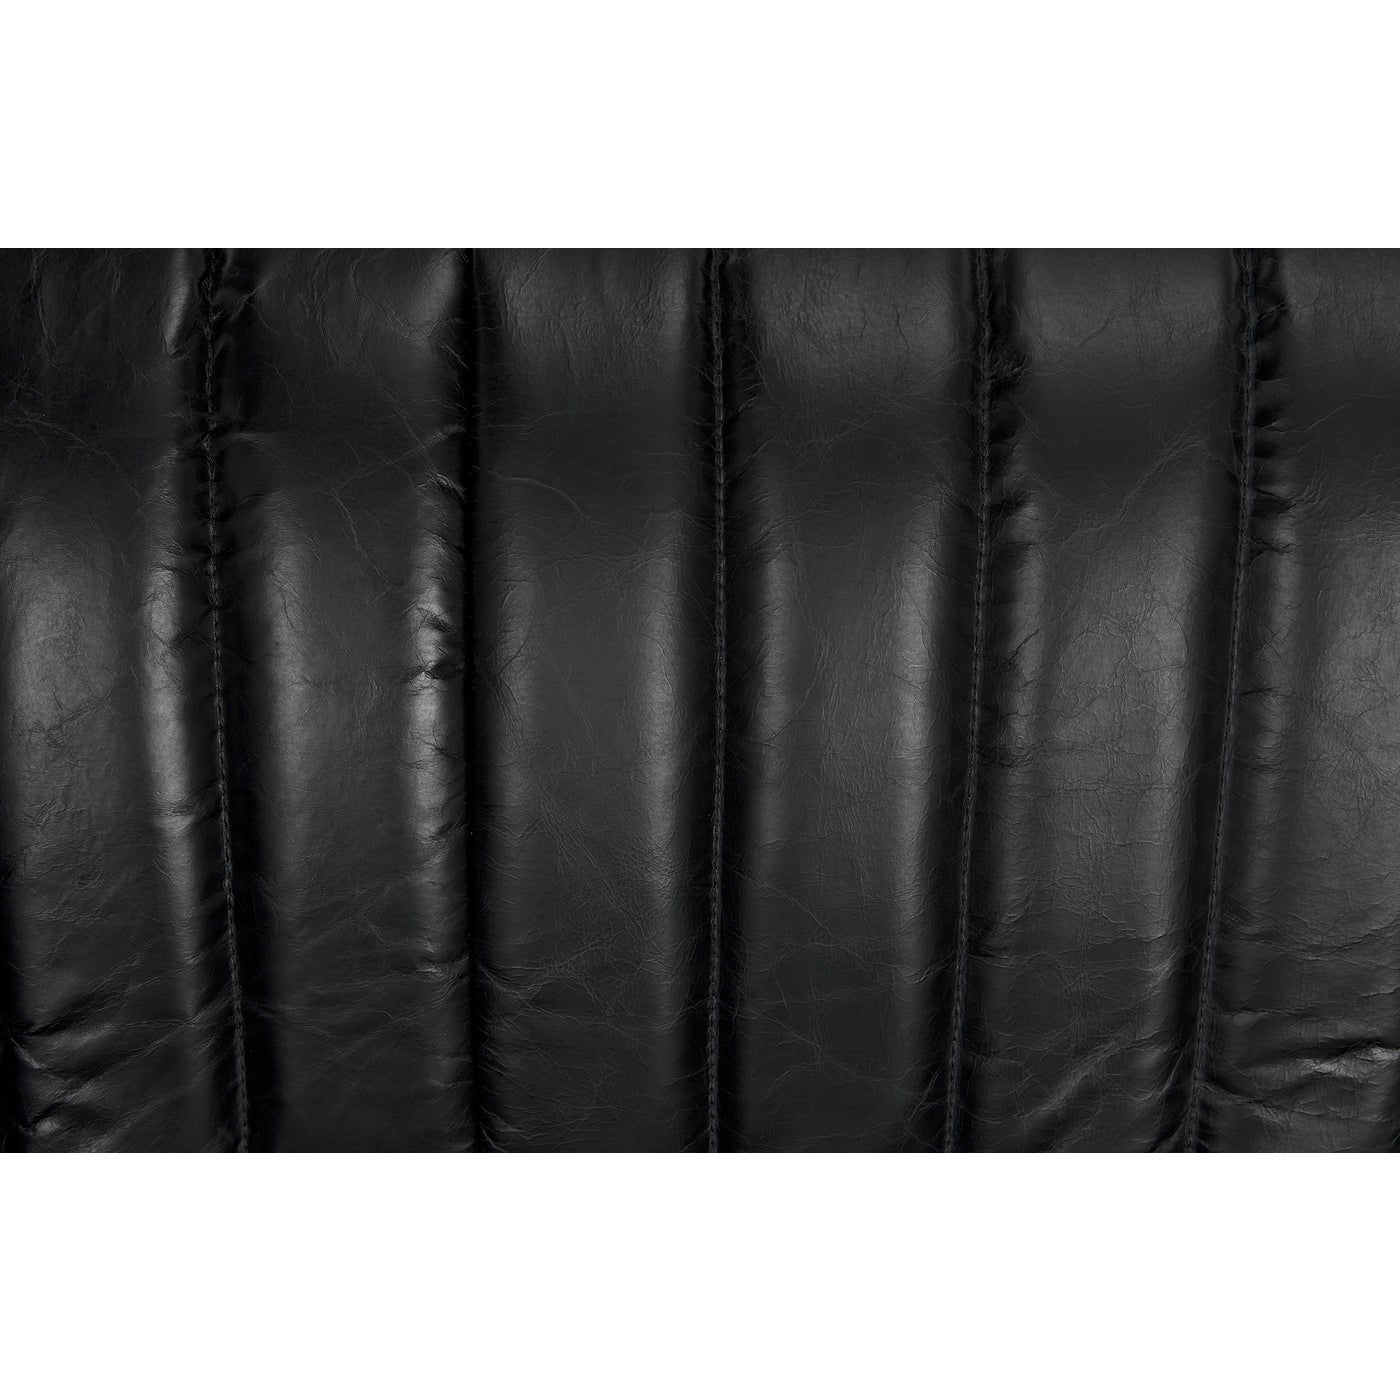 Hermes Sofa, Leather